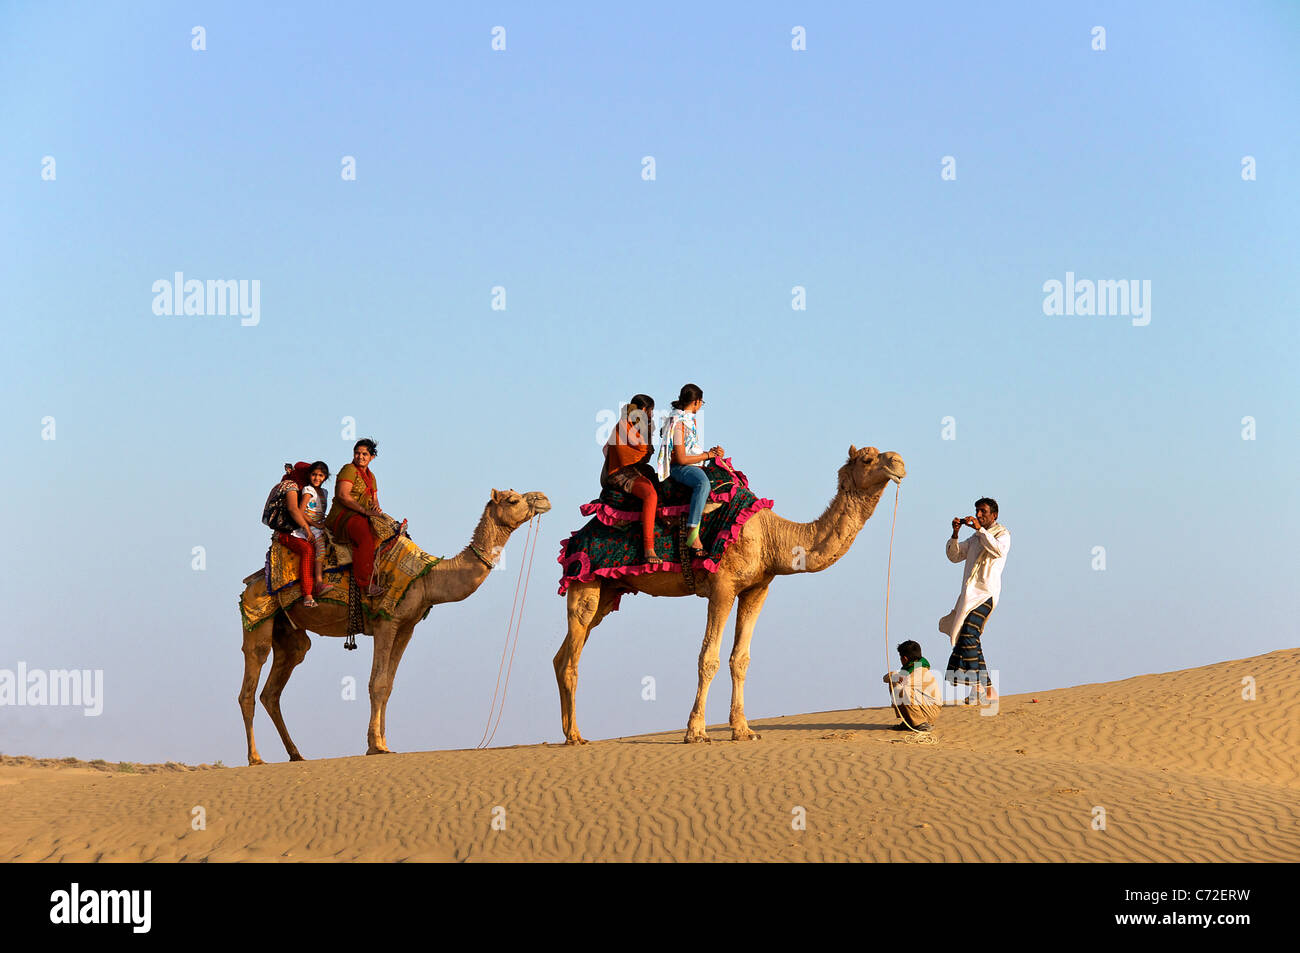 Indian i turisti sui cammelli avente le foto scattate a Sam le dune del deserto Parco Nazionale Western Rajasthan in India Foto Stock